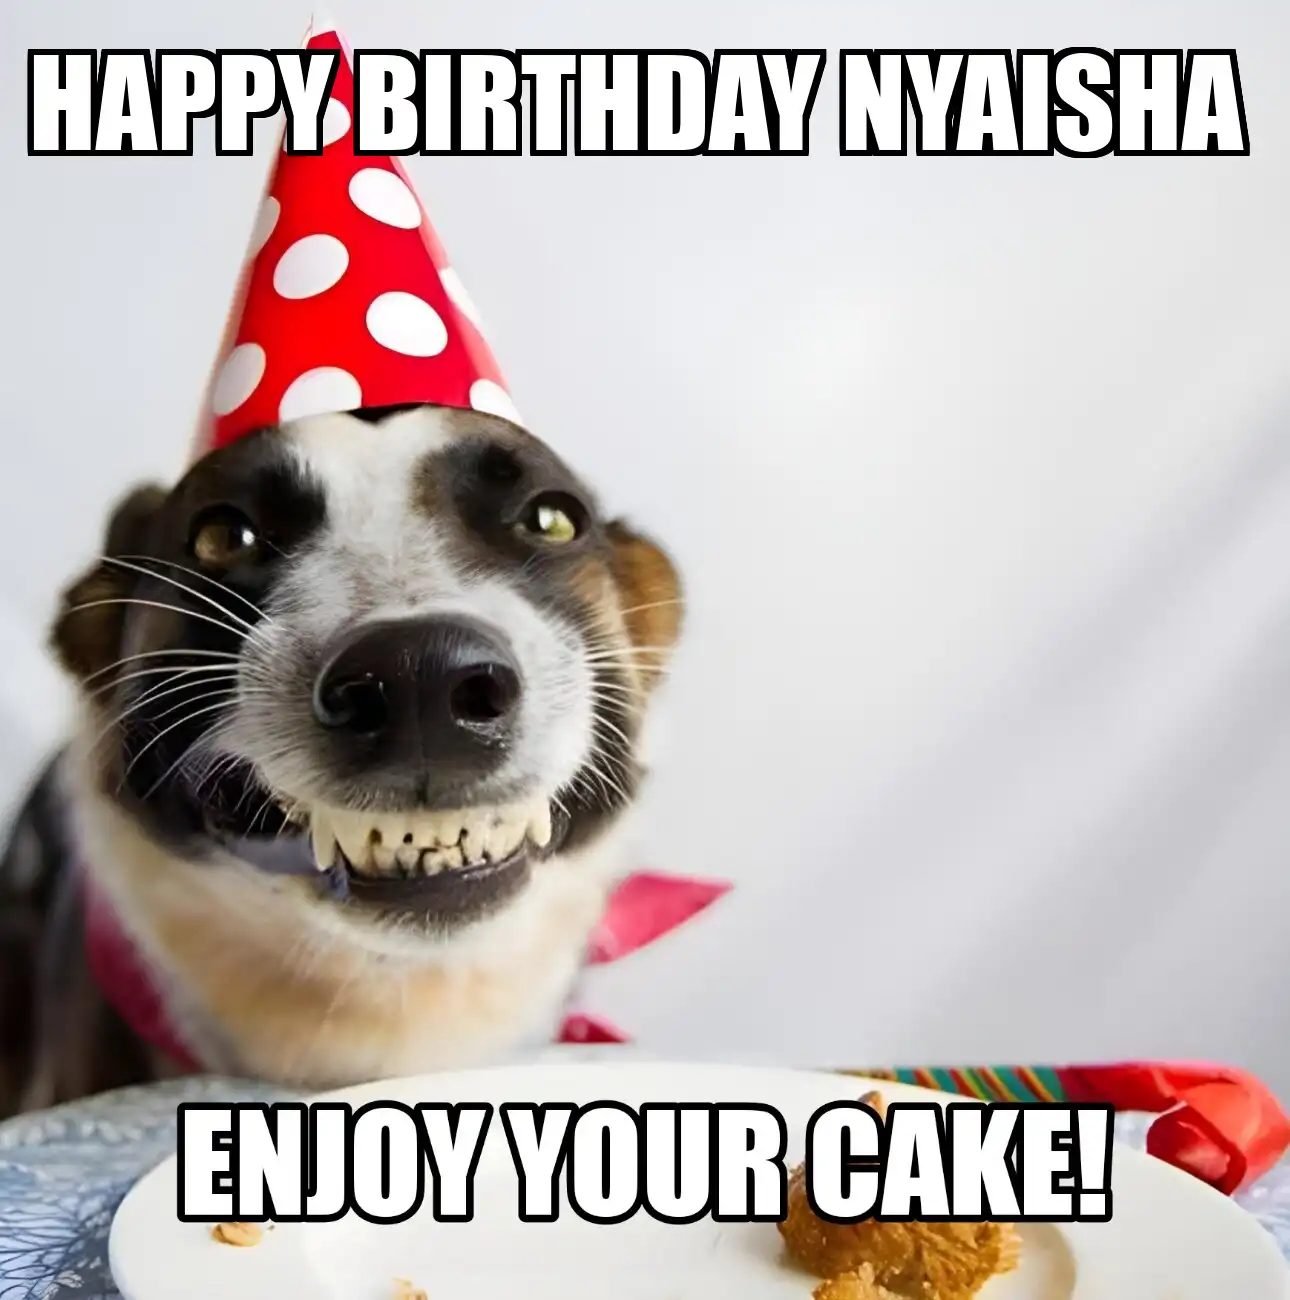 Happy Birthday Nyaisha Enjoy Your Cake Dog Meme